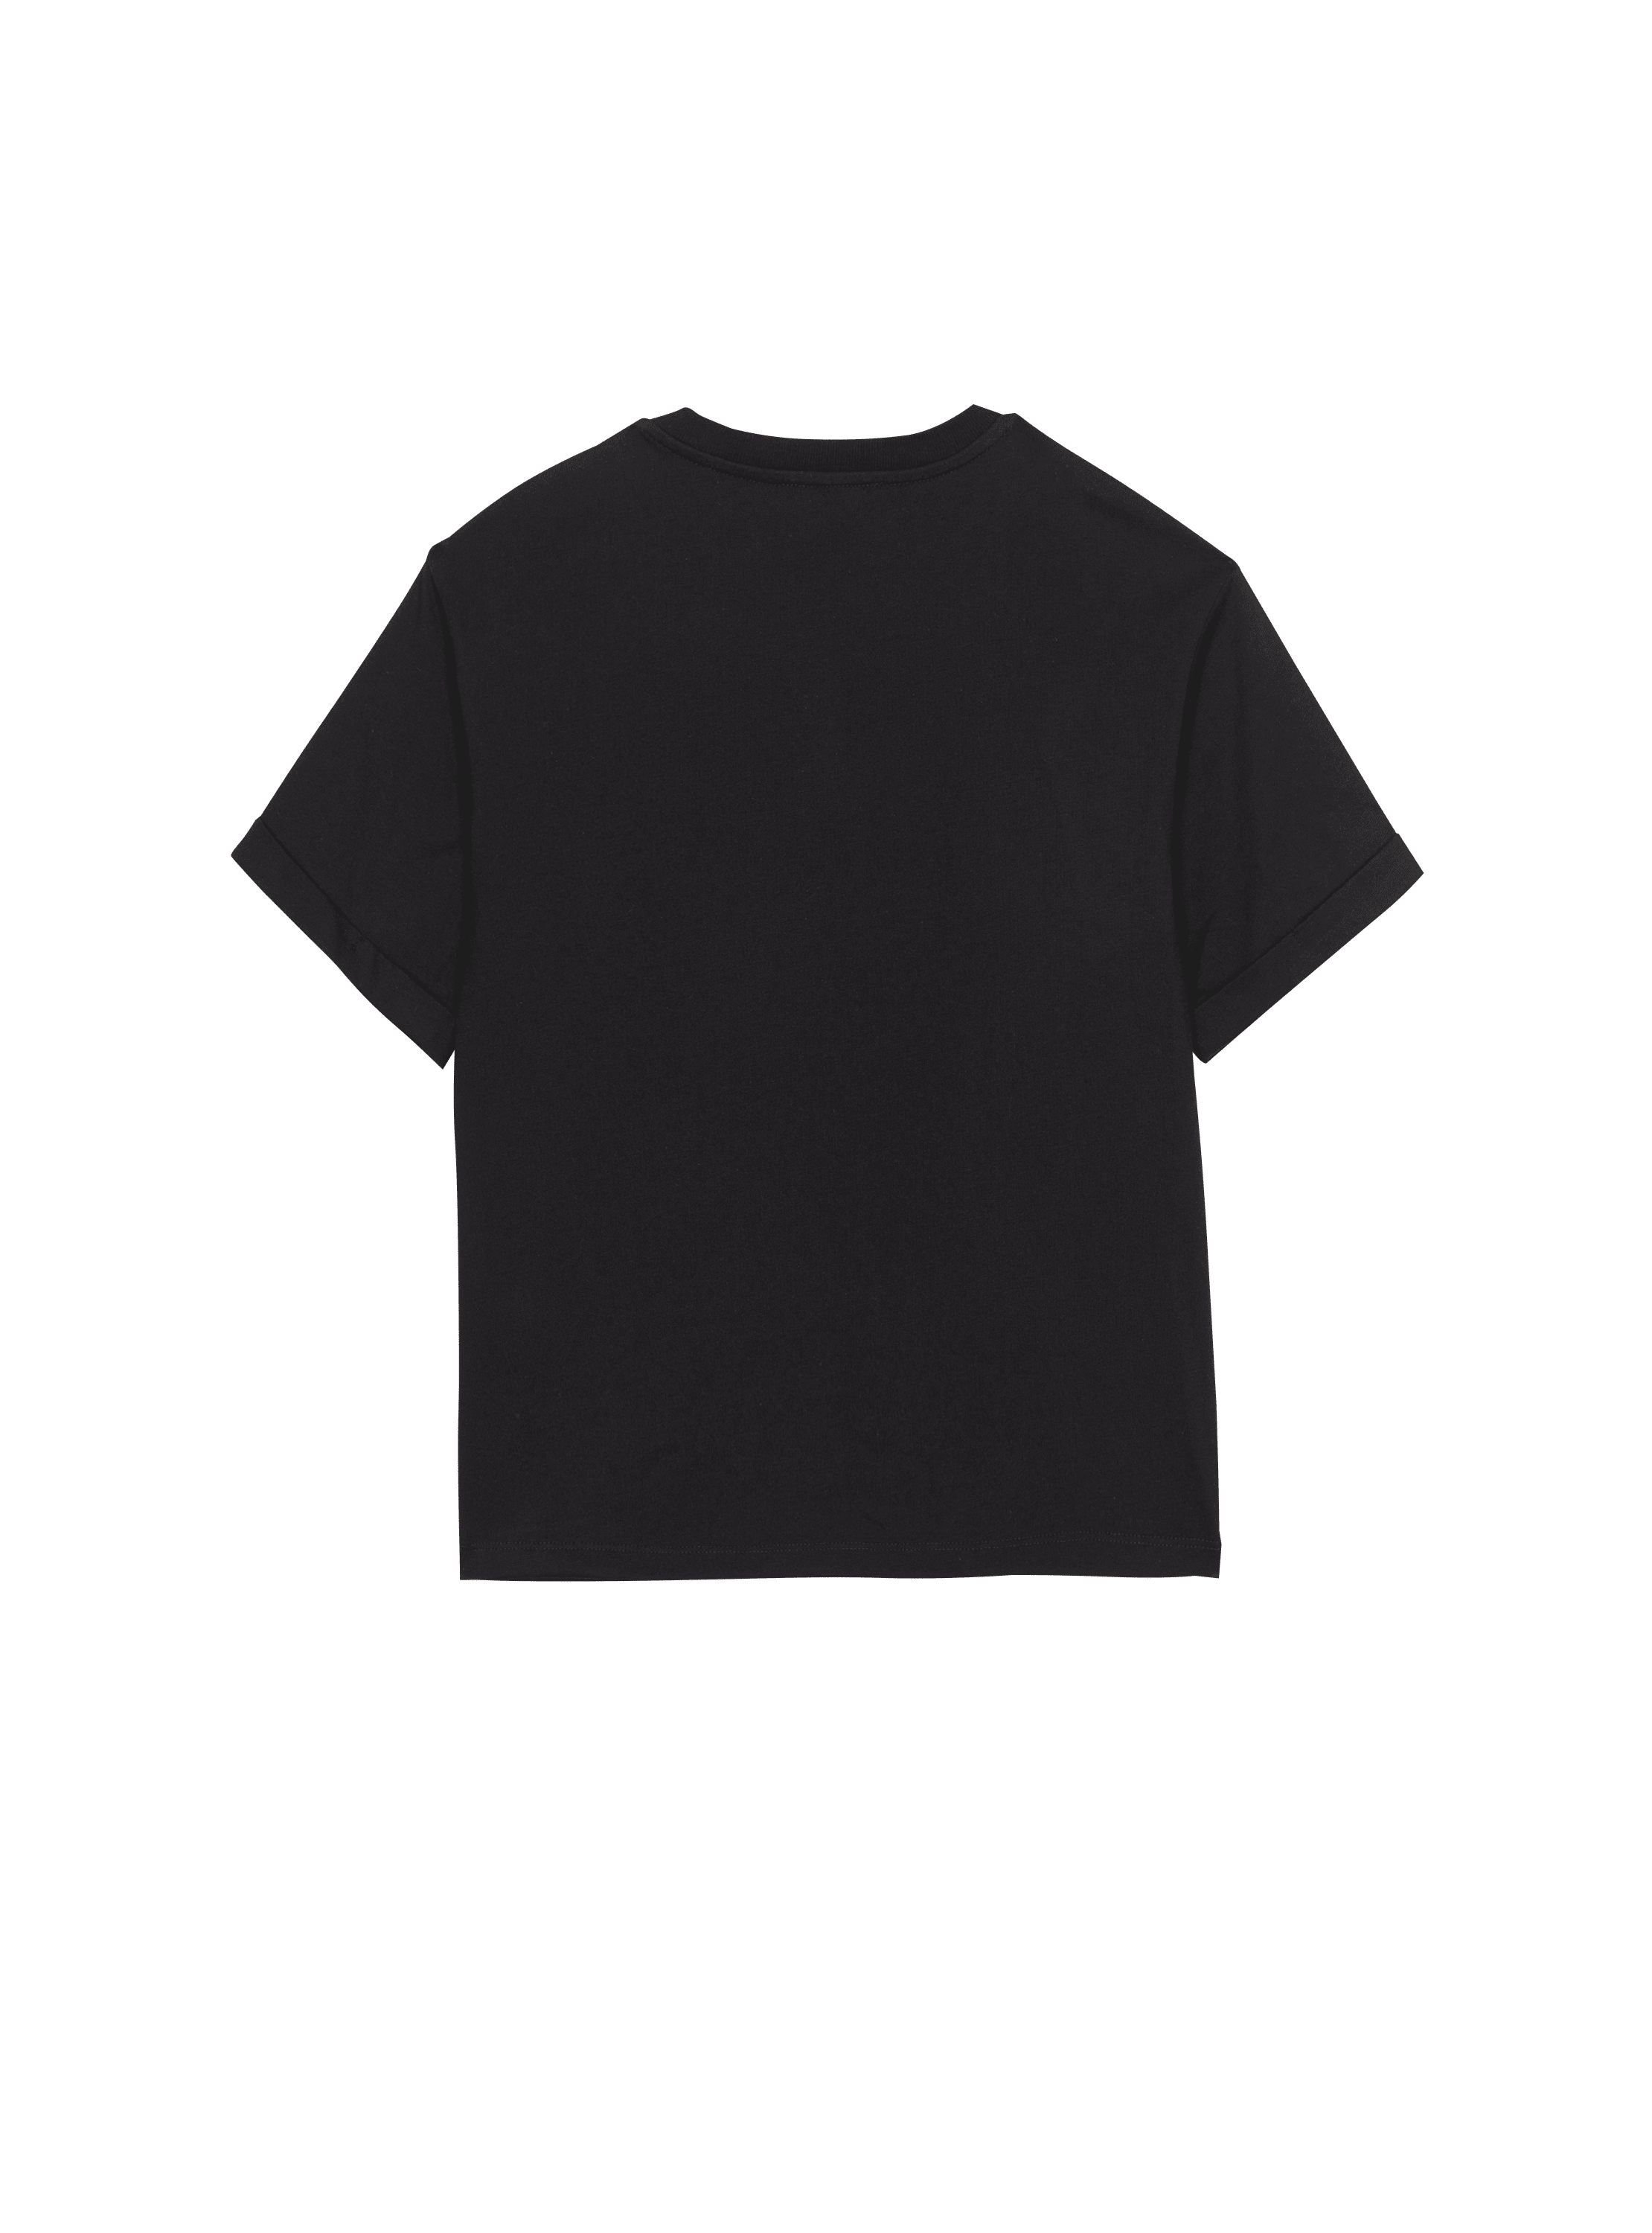 Balmain T-shirt black - Child | BALMAIN